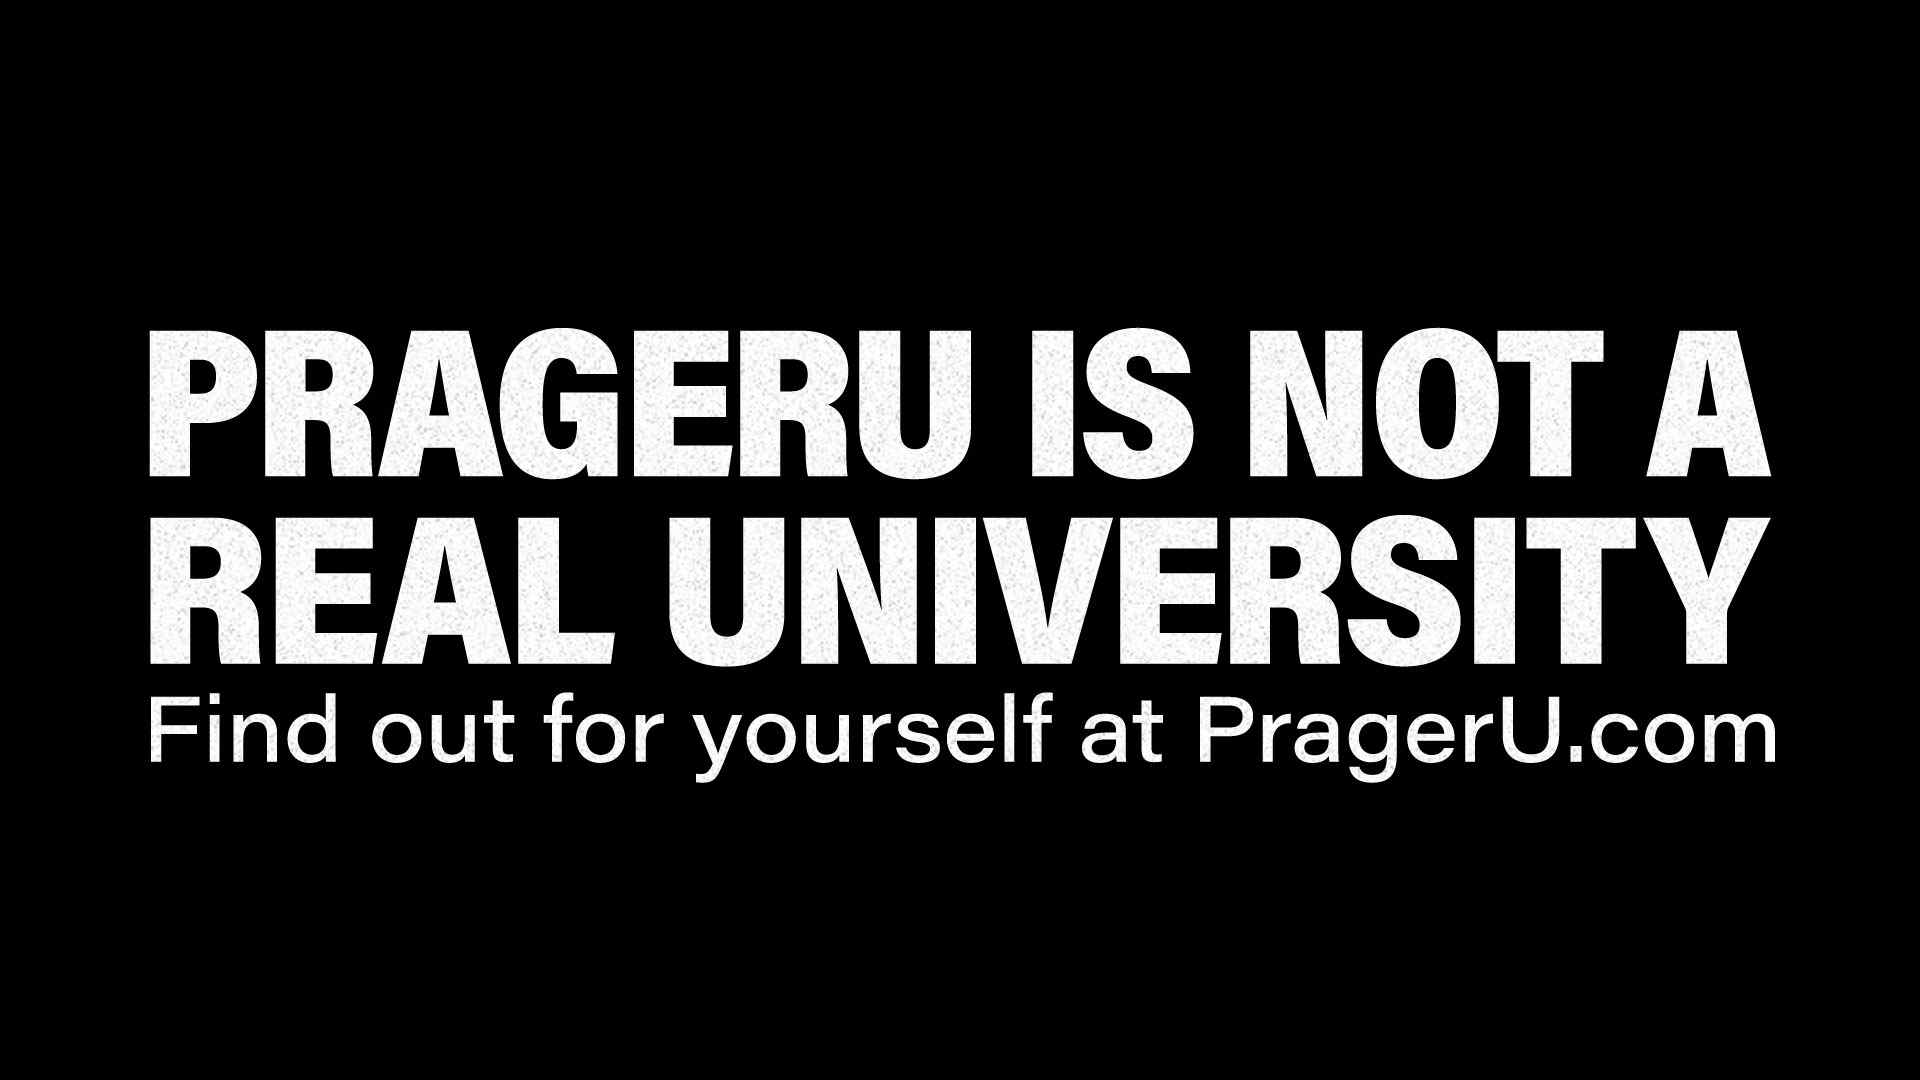 PragerU is NOT a Real University